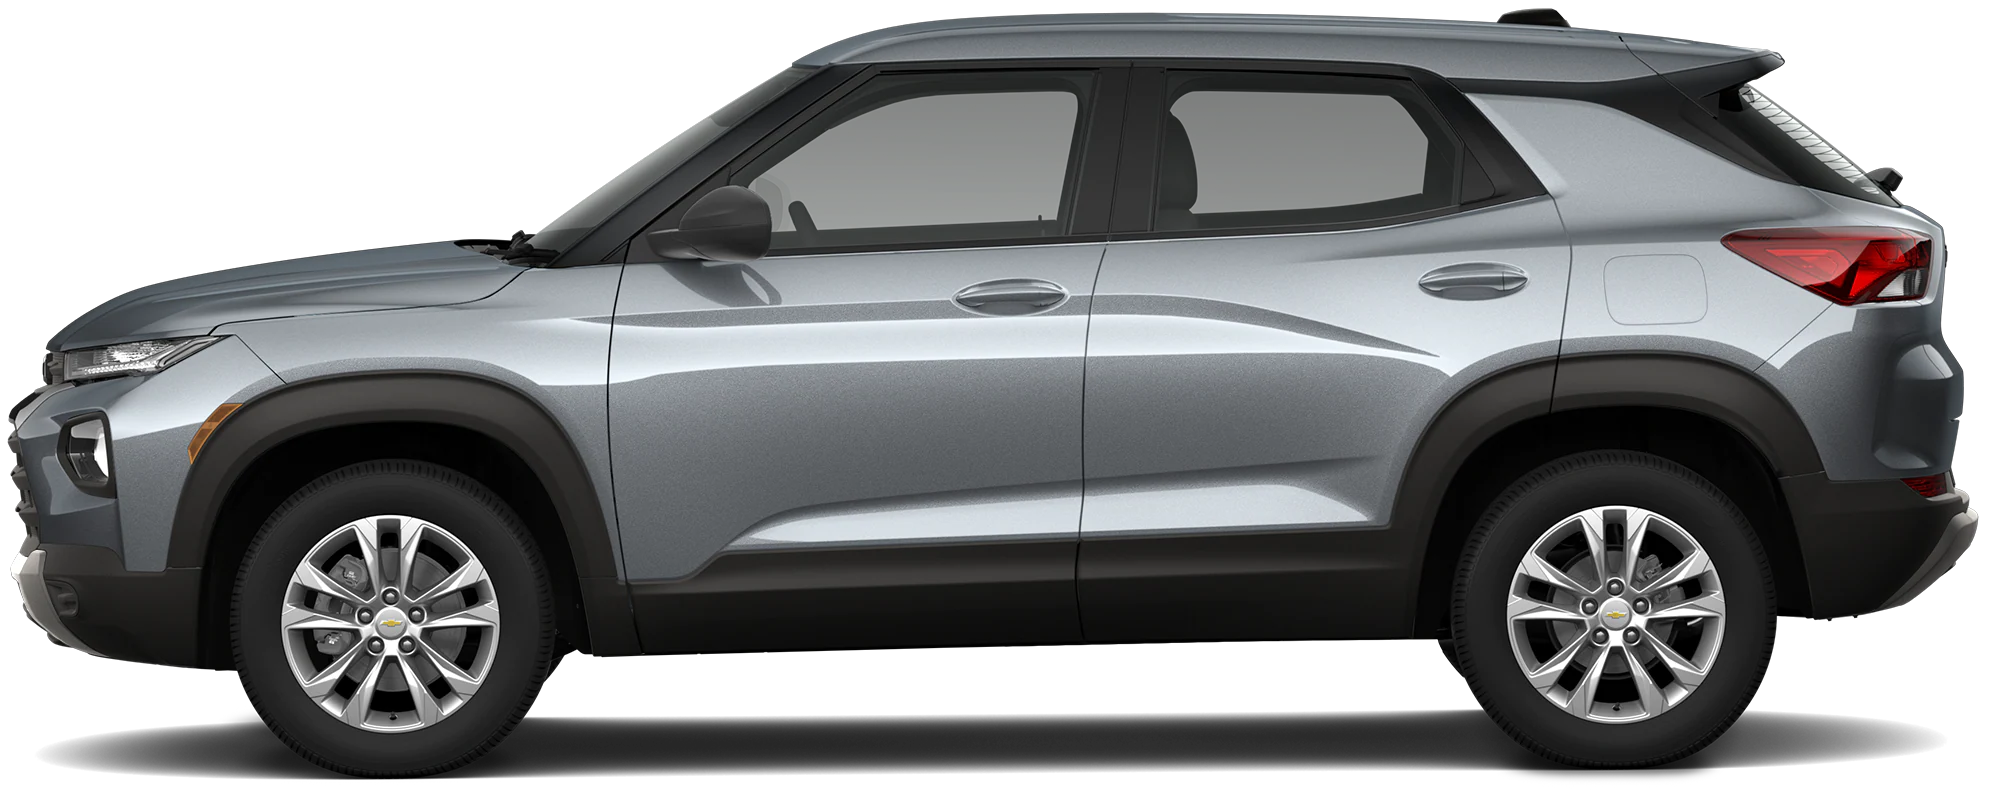 Chevrolet Trailblazer exterior - Side Profile